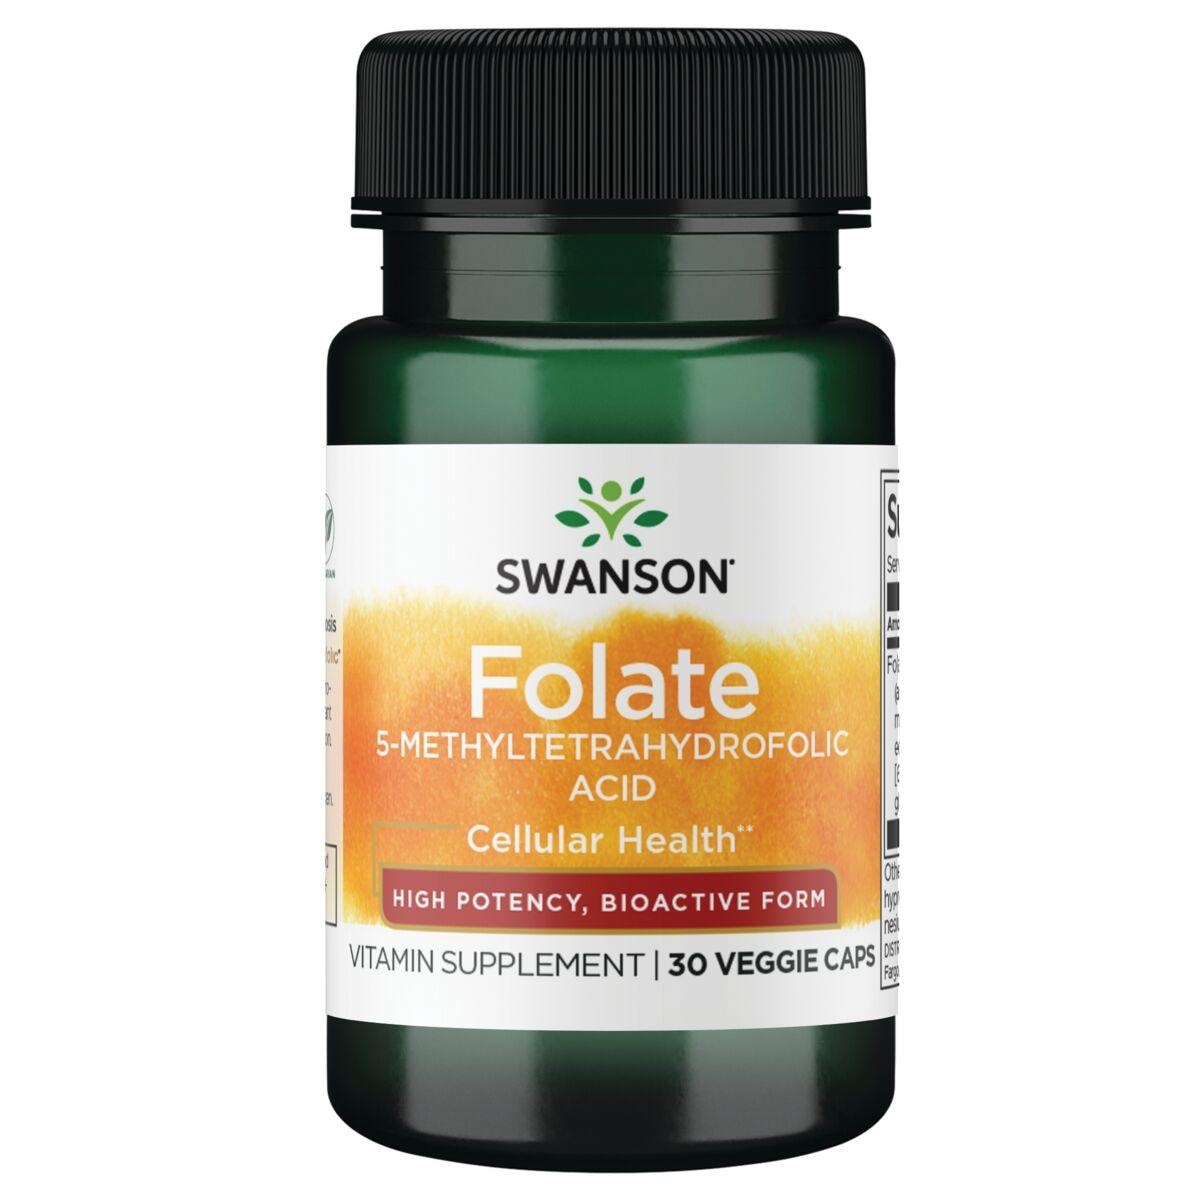 Swanson Ultra Folate 5-Methyltetrahydrofolic Acid - High Potency, Bioactive Form Vitamin | 800 mcg Dfe | 30 Veg Caps